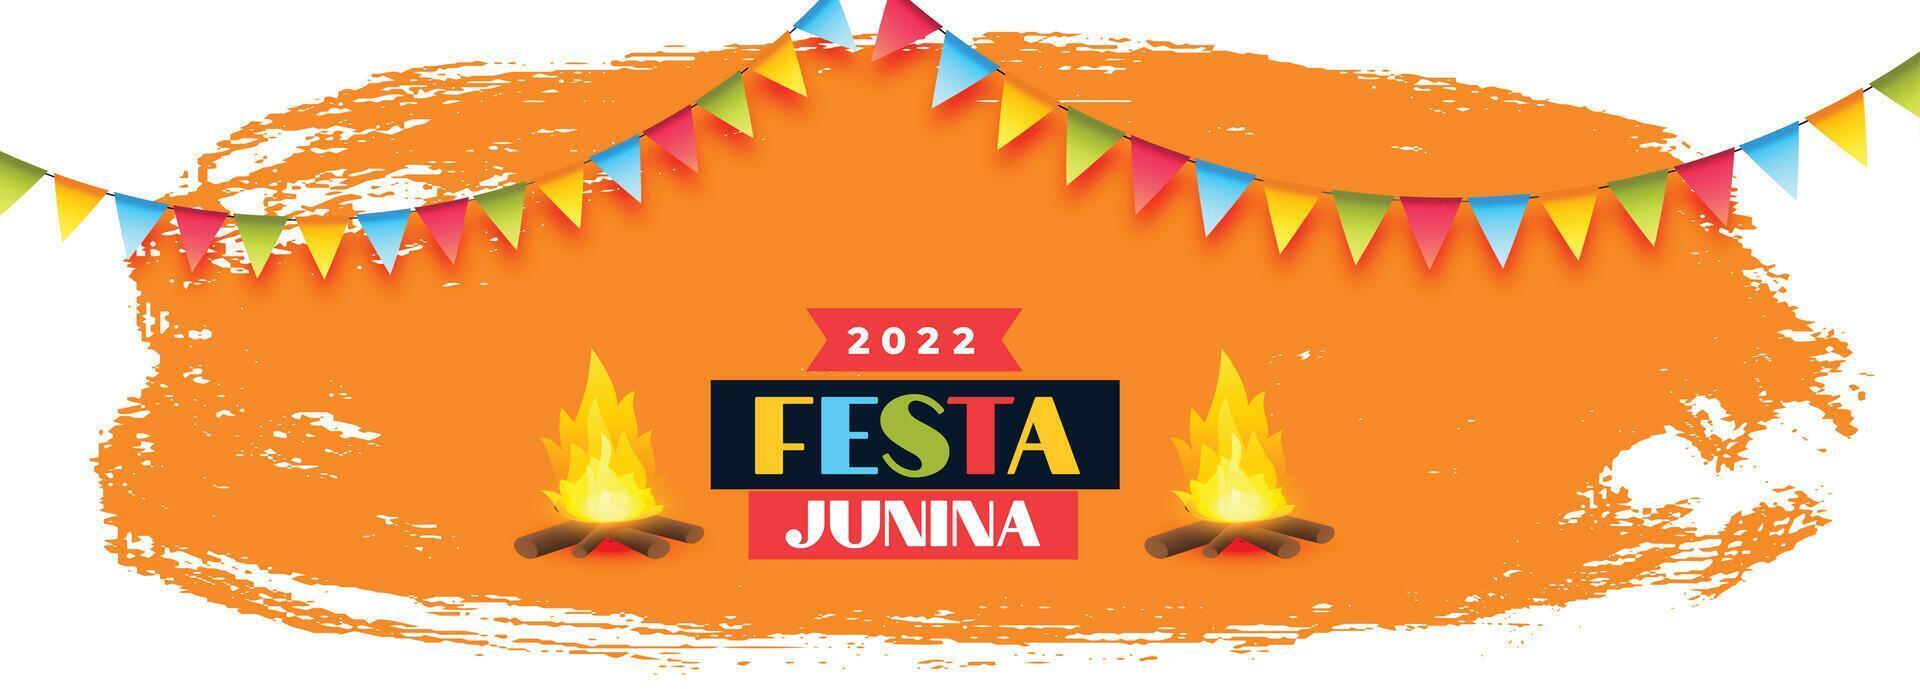 2022 festa junina Brasilien festival baner med bål och fest flaggor vektor